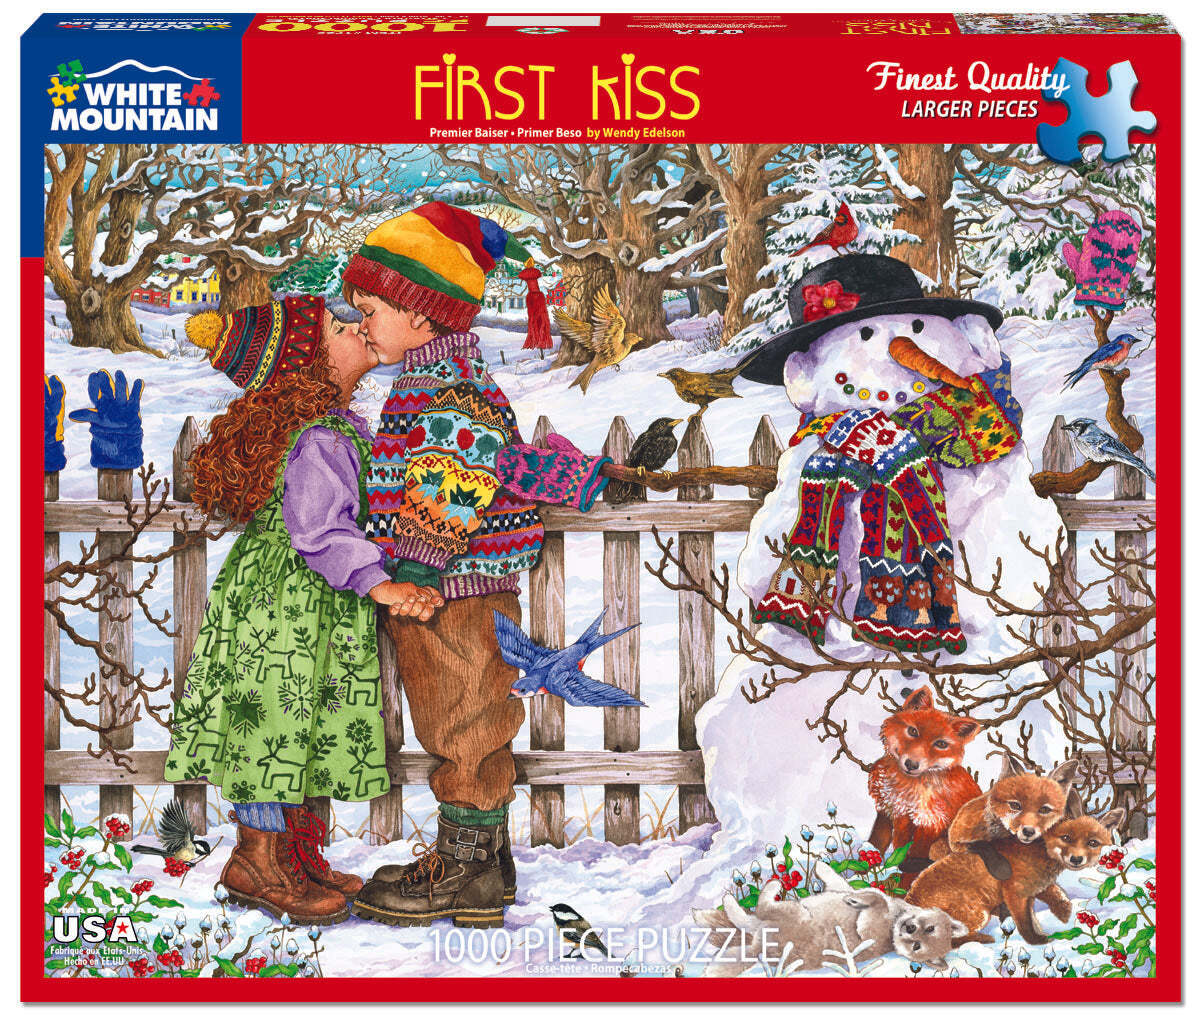 First Kiss (1725pz) - 1000 Piece Jigsaw Puzzle